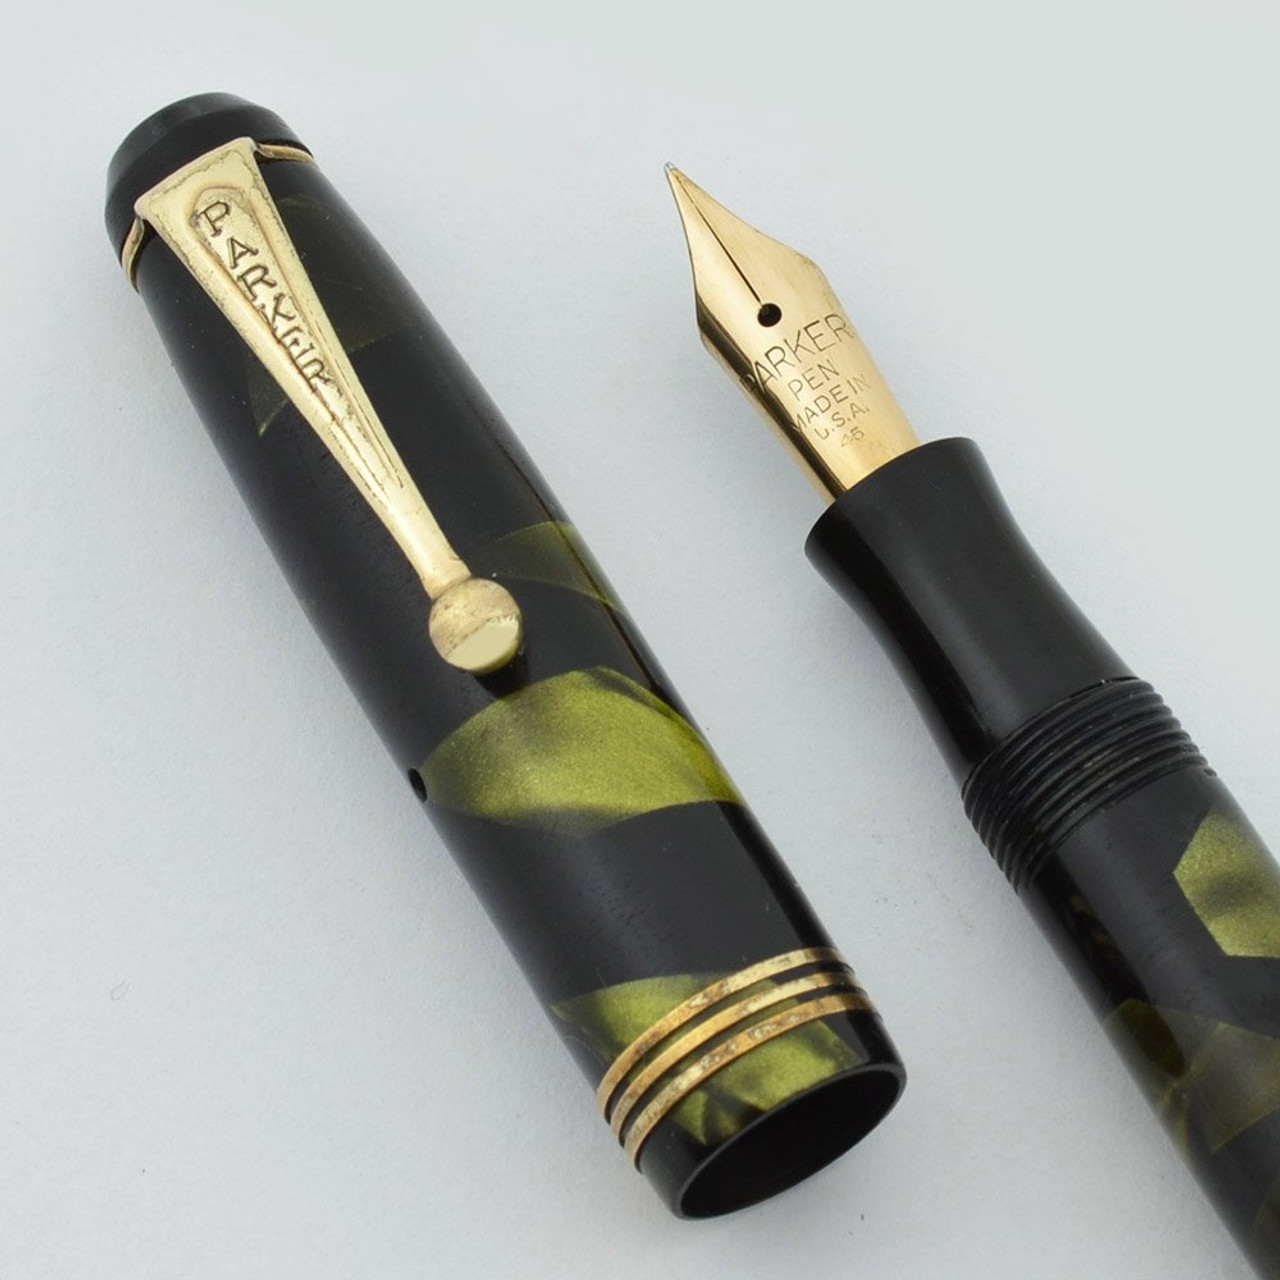 Parker Thrift Time Fountain Pen - 1930s, Button Filler, Green Marble, Fine Semi-Flex Nib (Excellent, Restored)